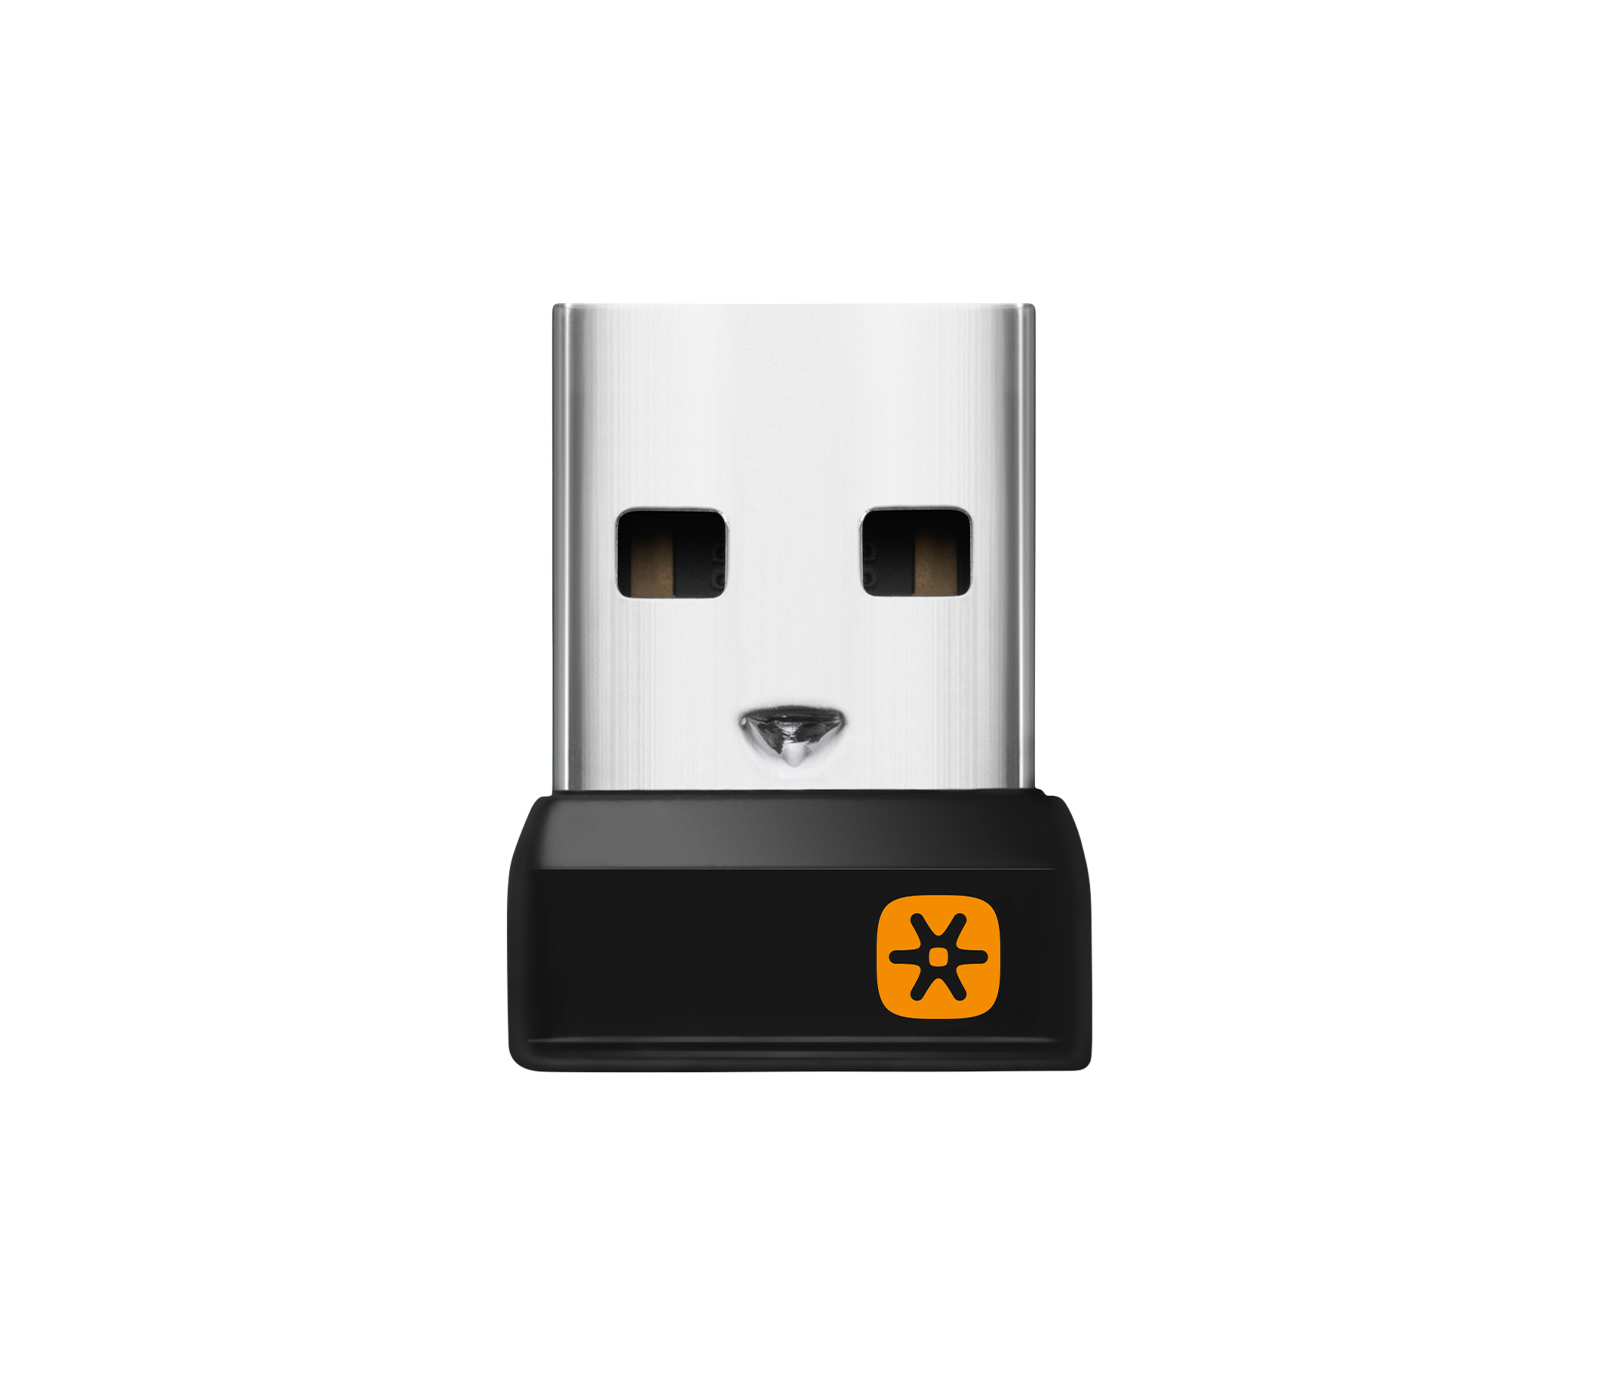 For Logitech Unifying Récepteur USB Dongle 6 Devices Performance Clavier l1sa